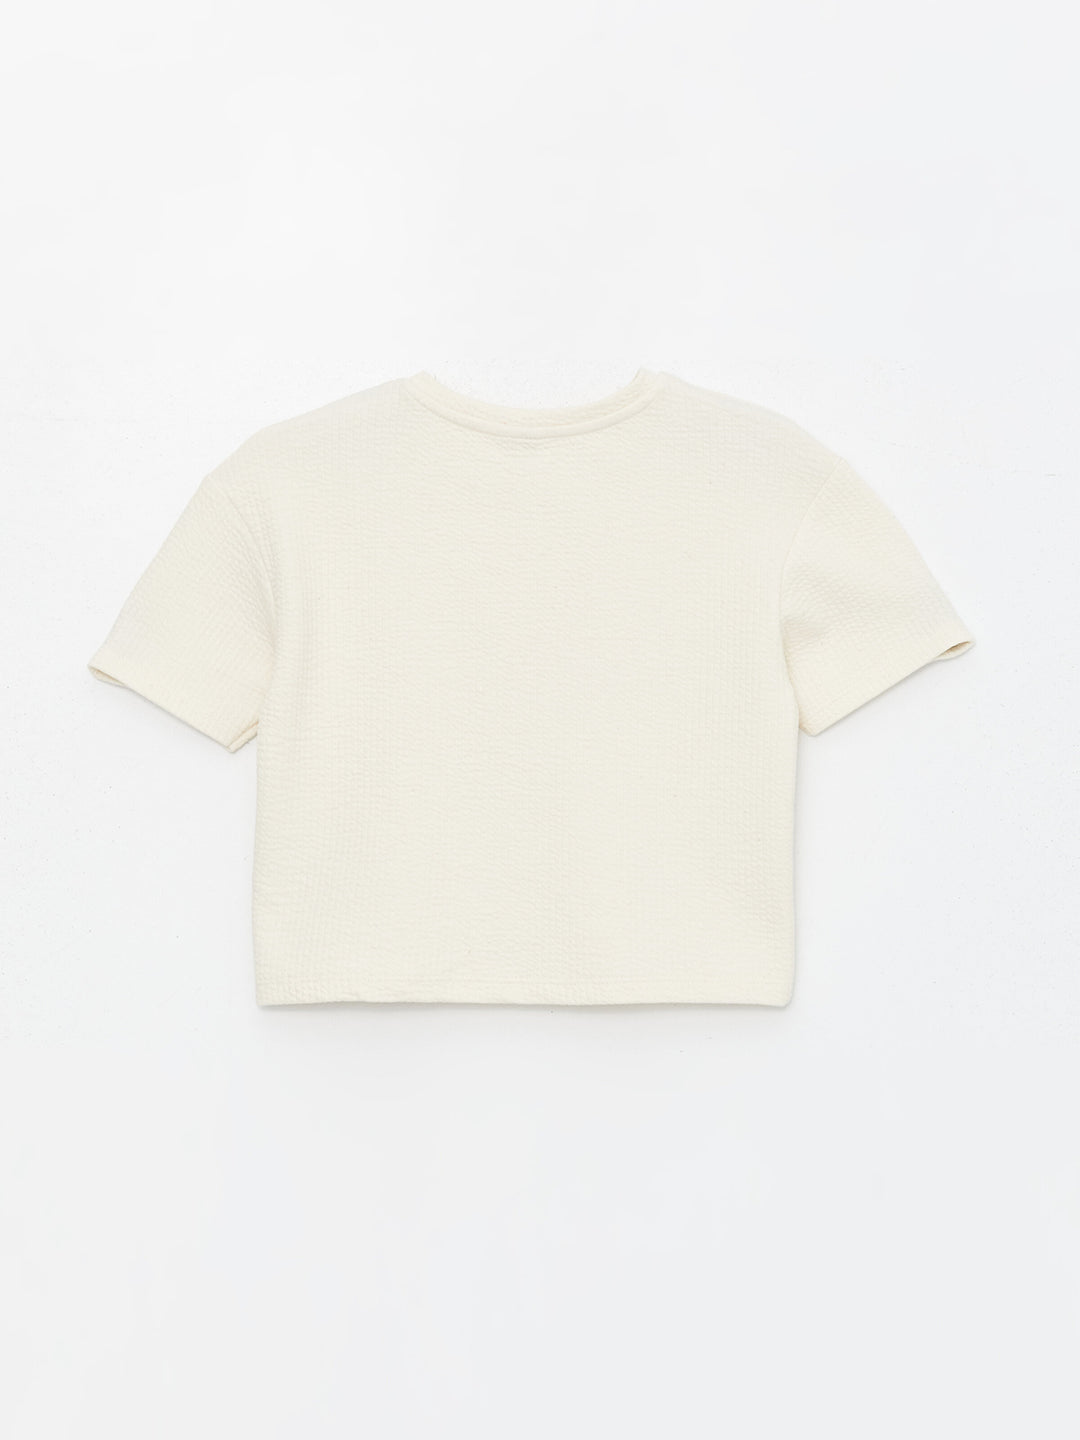 Crew Neck Embroidered Short Sleeve Girls T-Shirt